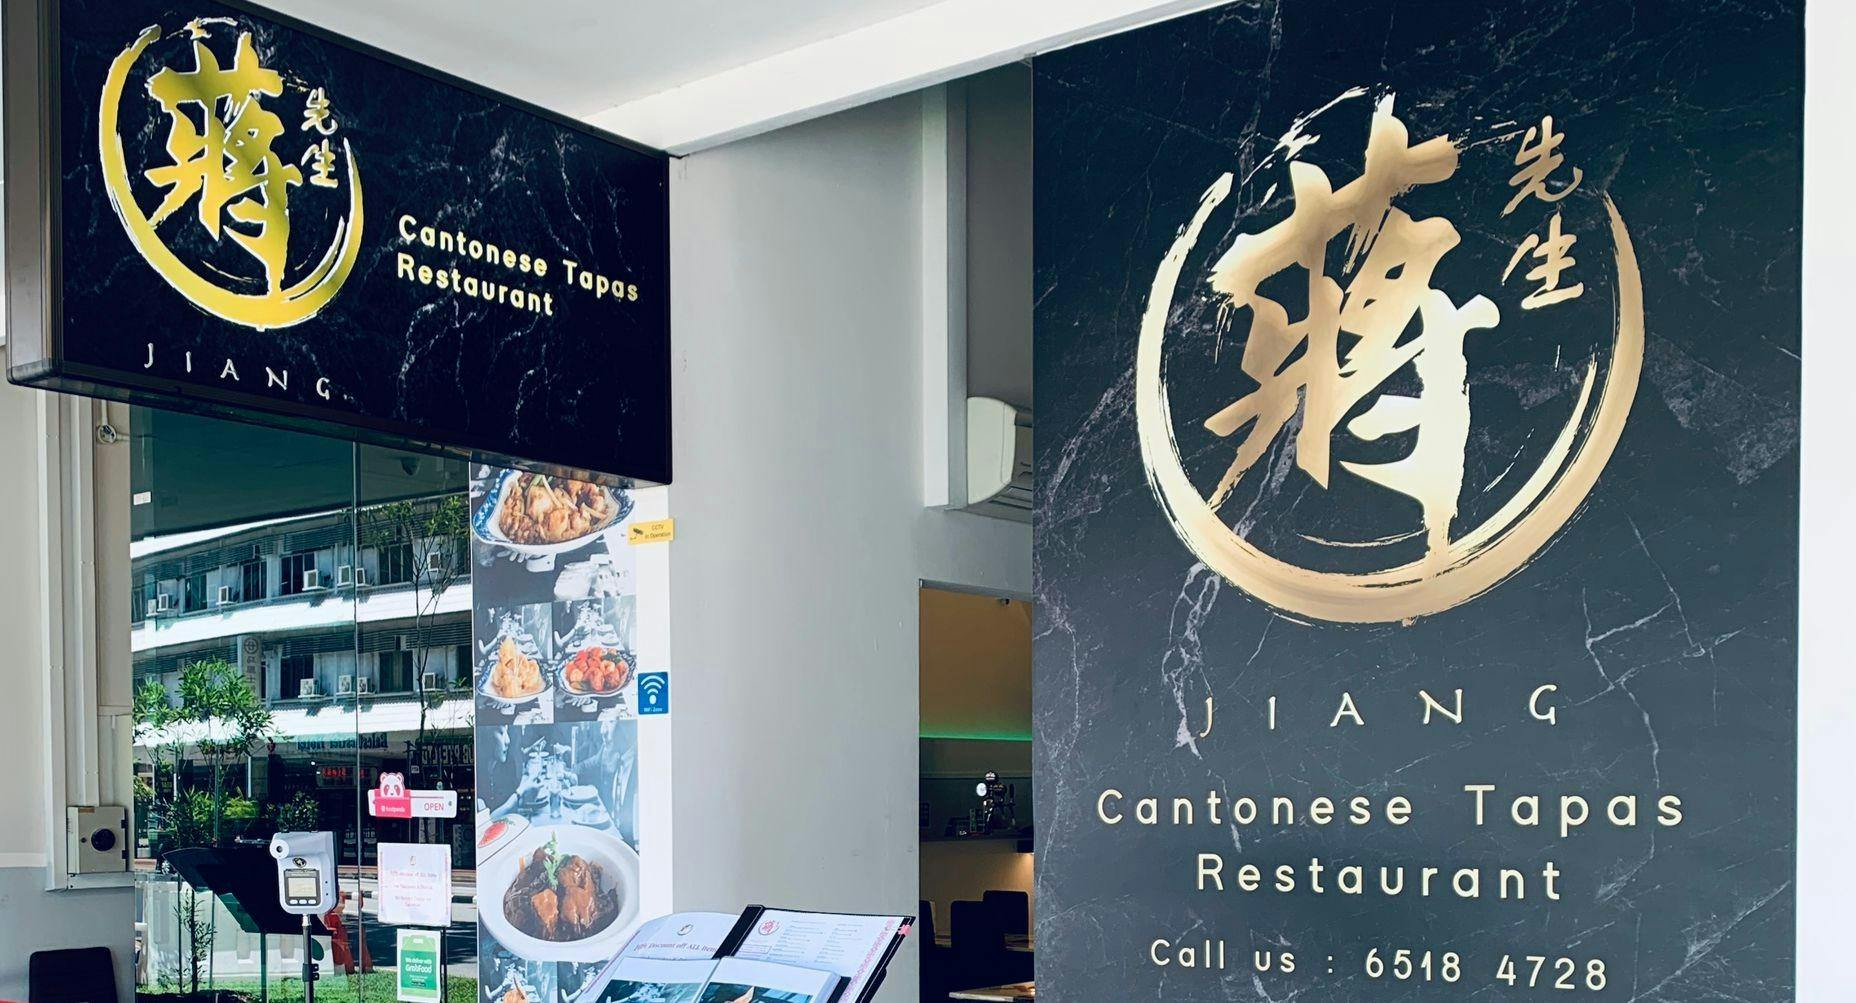 Photo of restaurant Jiang 蔣先生 Cantonese Tapas Restaurant in Balestier, Singapore